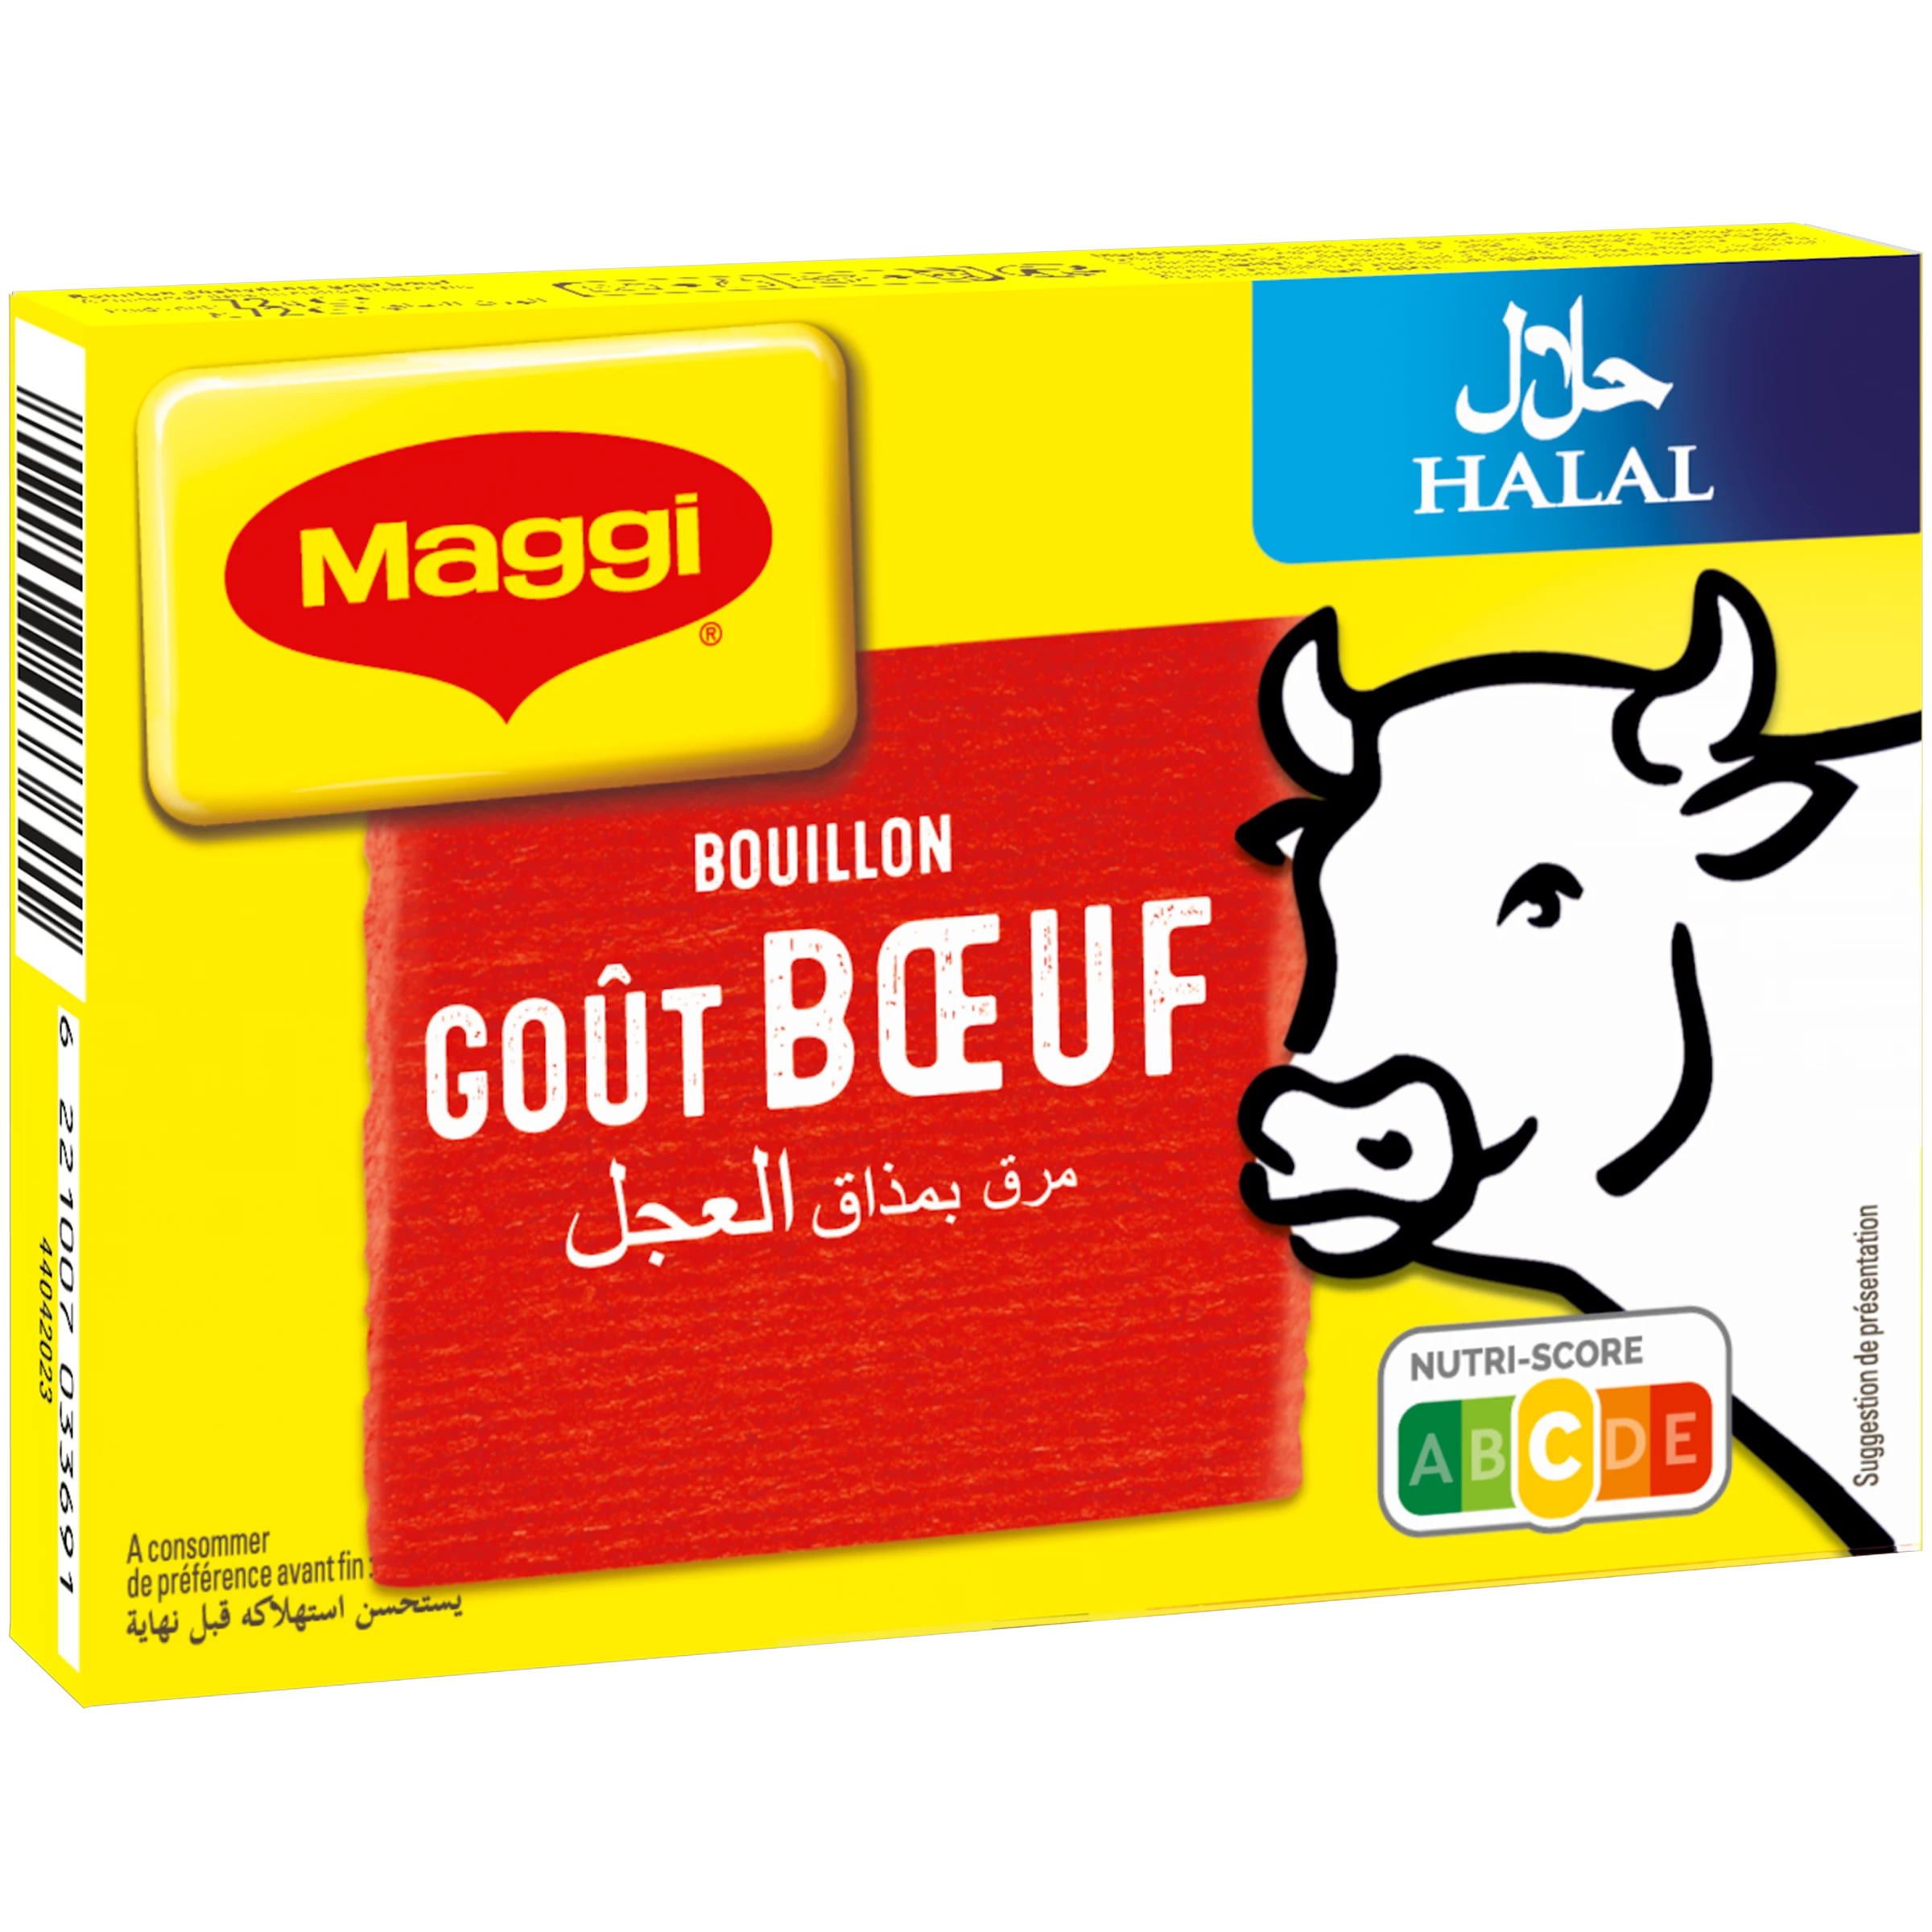 Maggi Bouil Boeuf Halal 72g